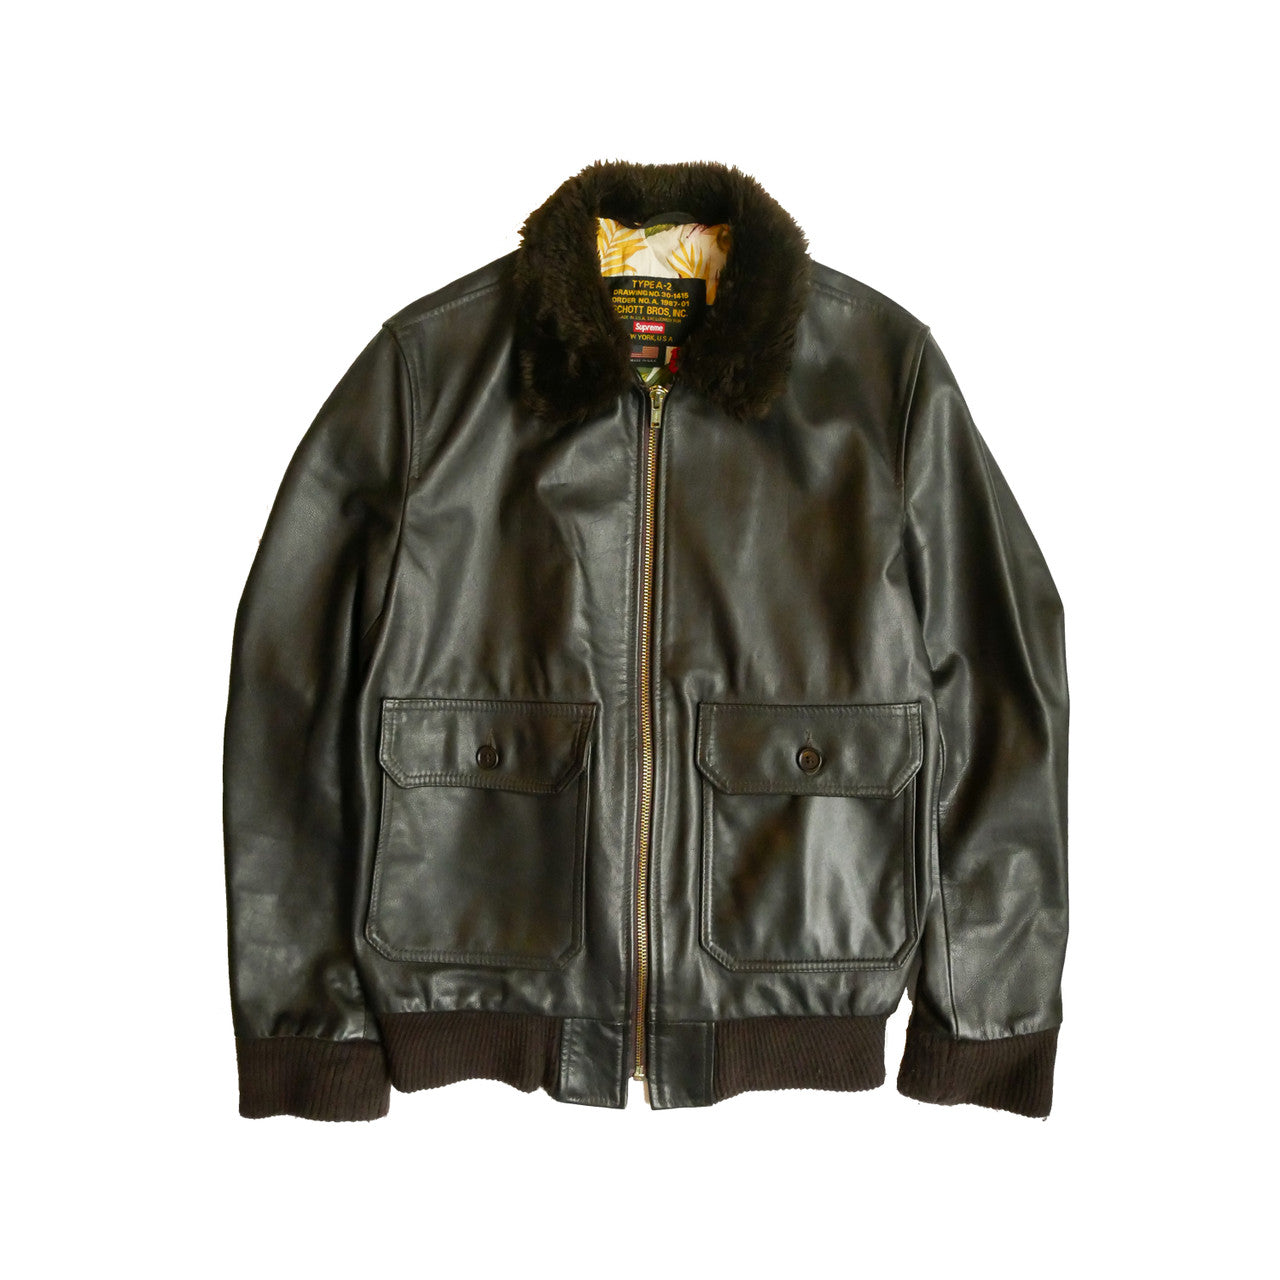 Supreme x Schott Leather Jacket